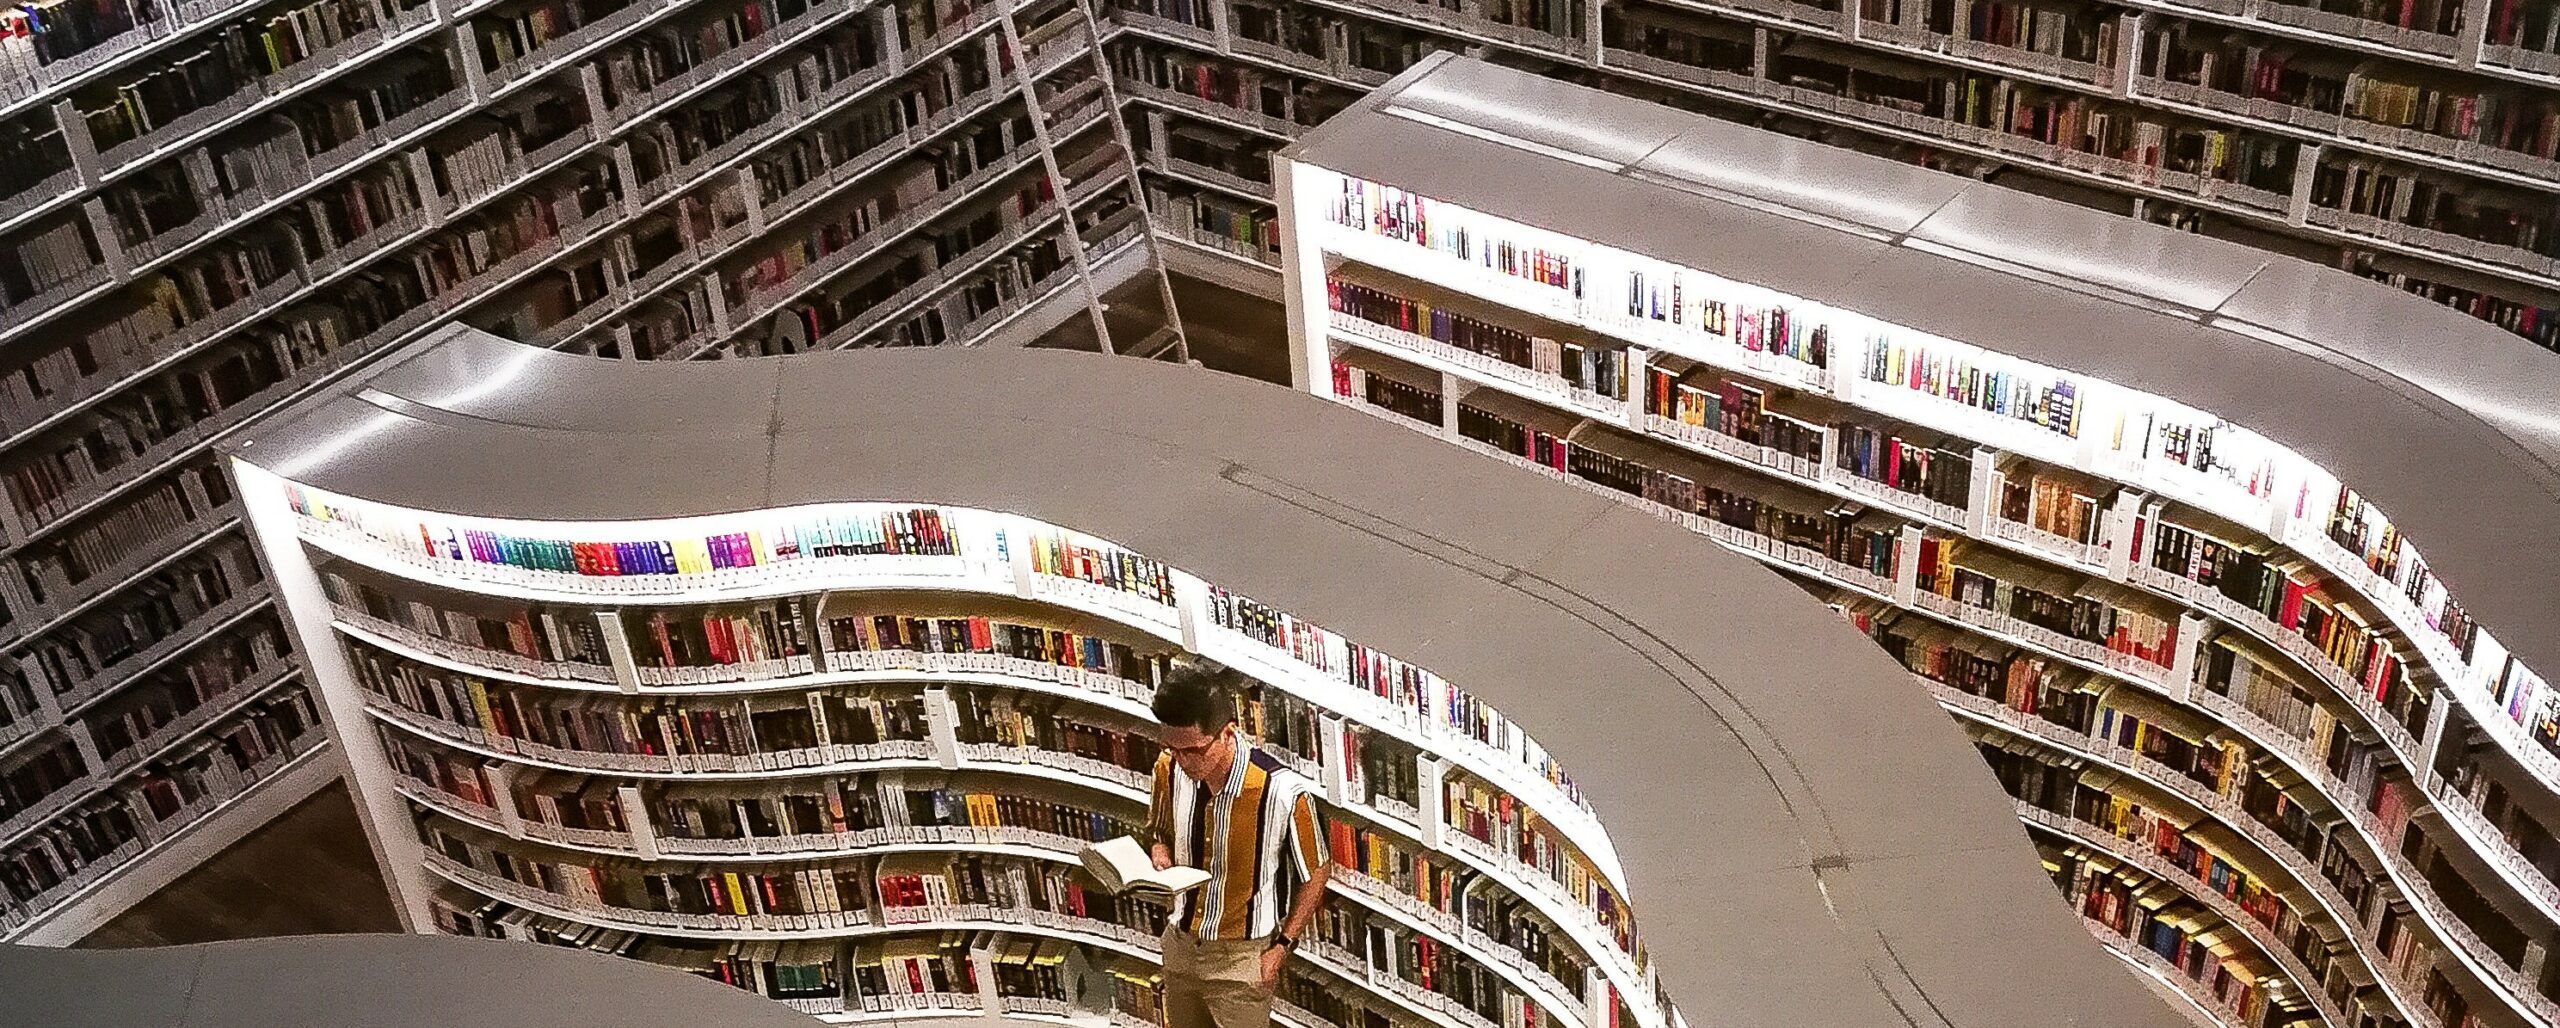 long shelf of books